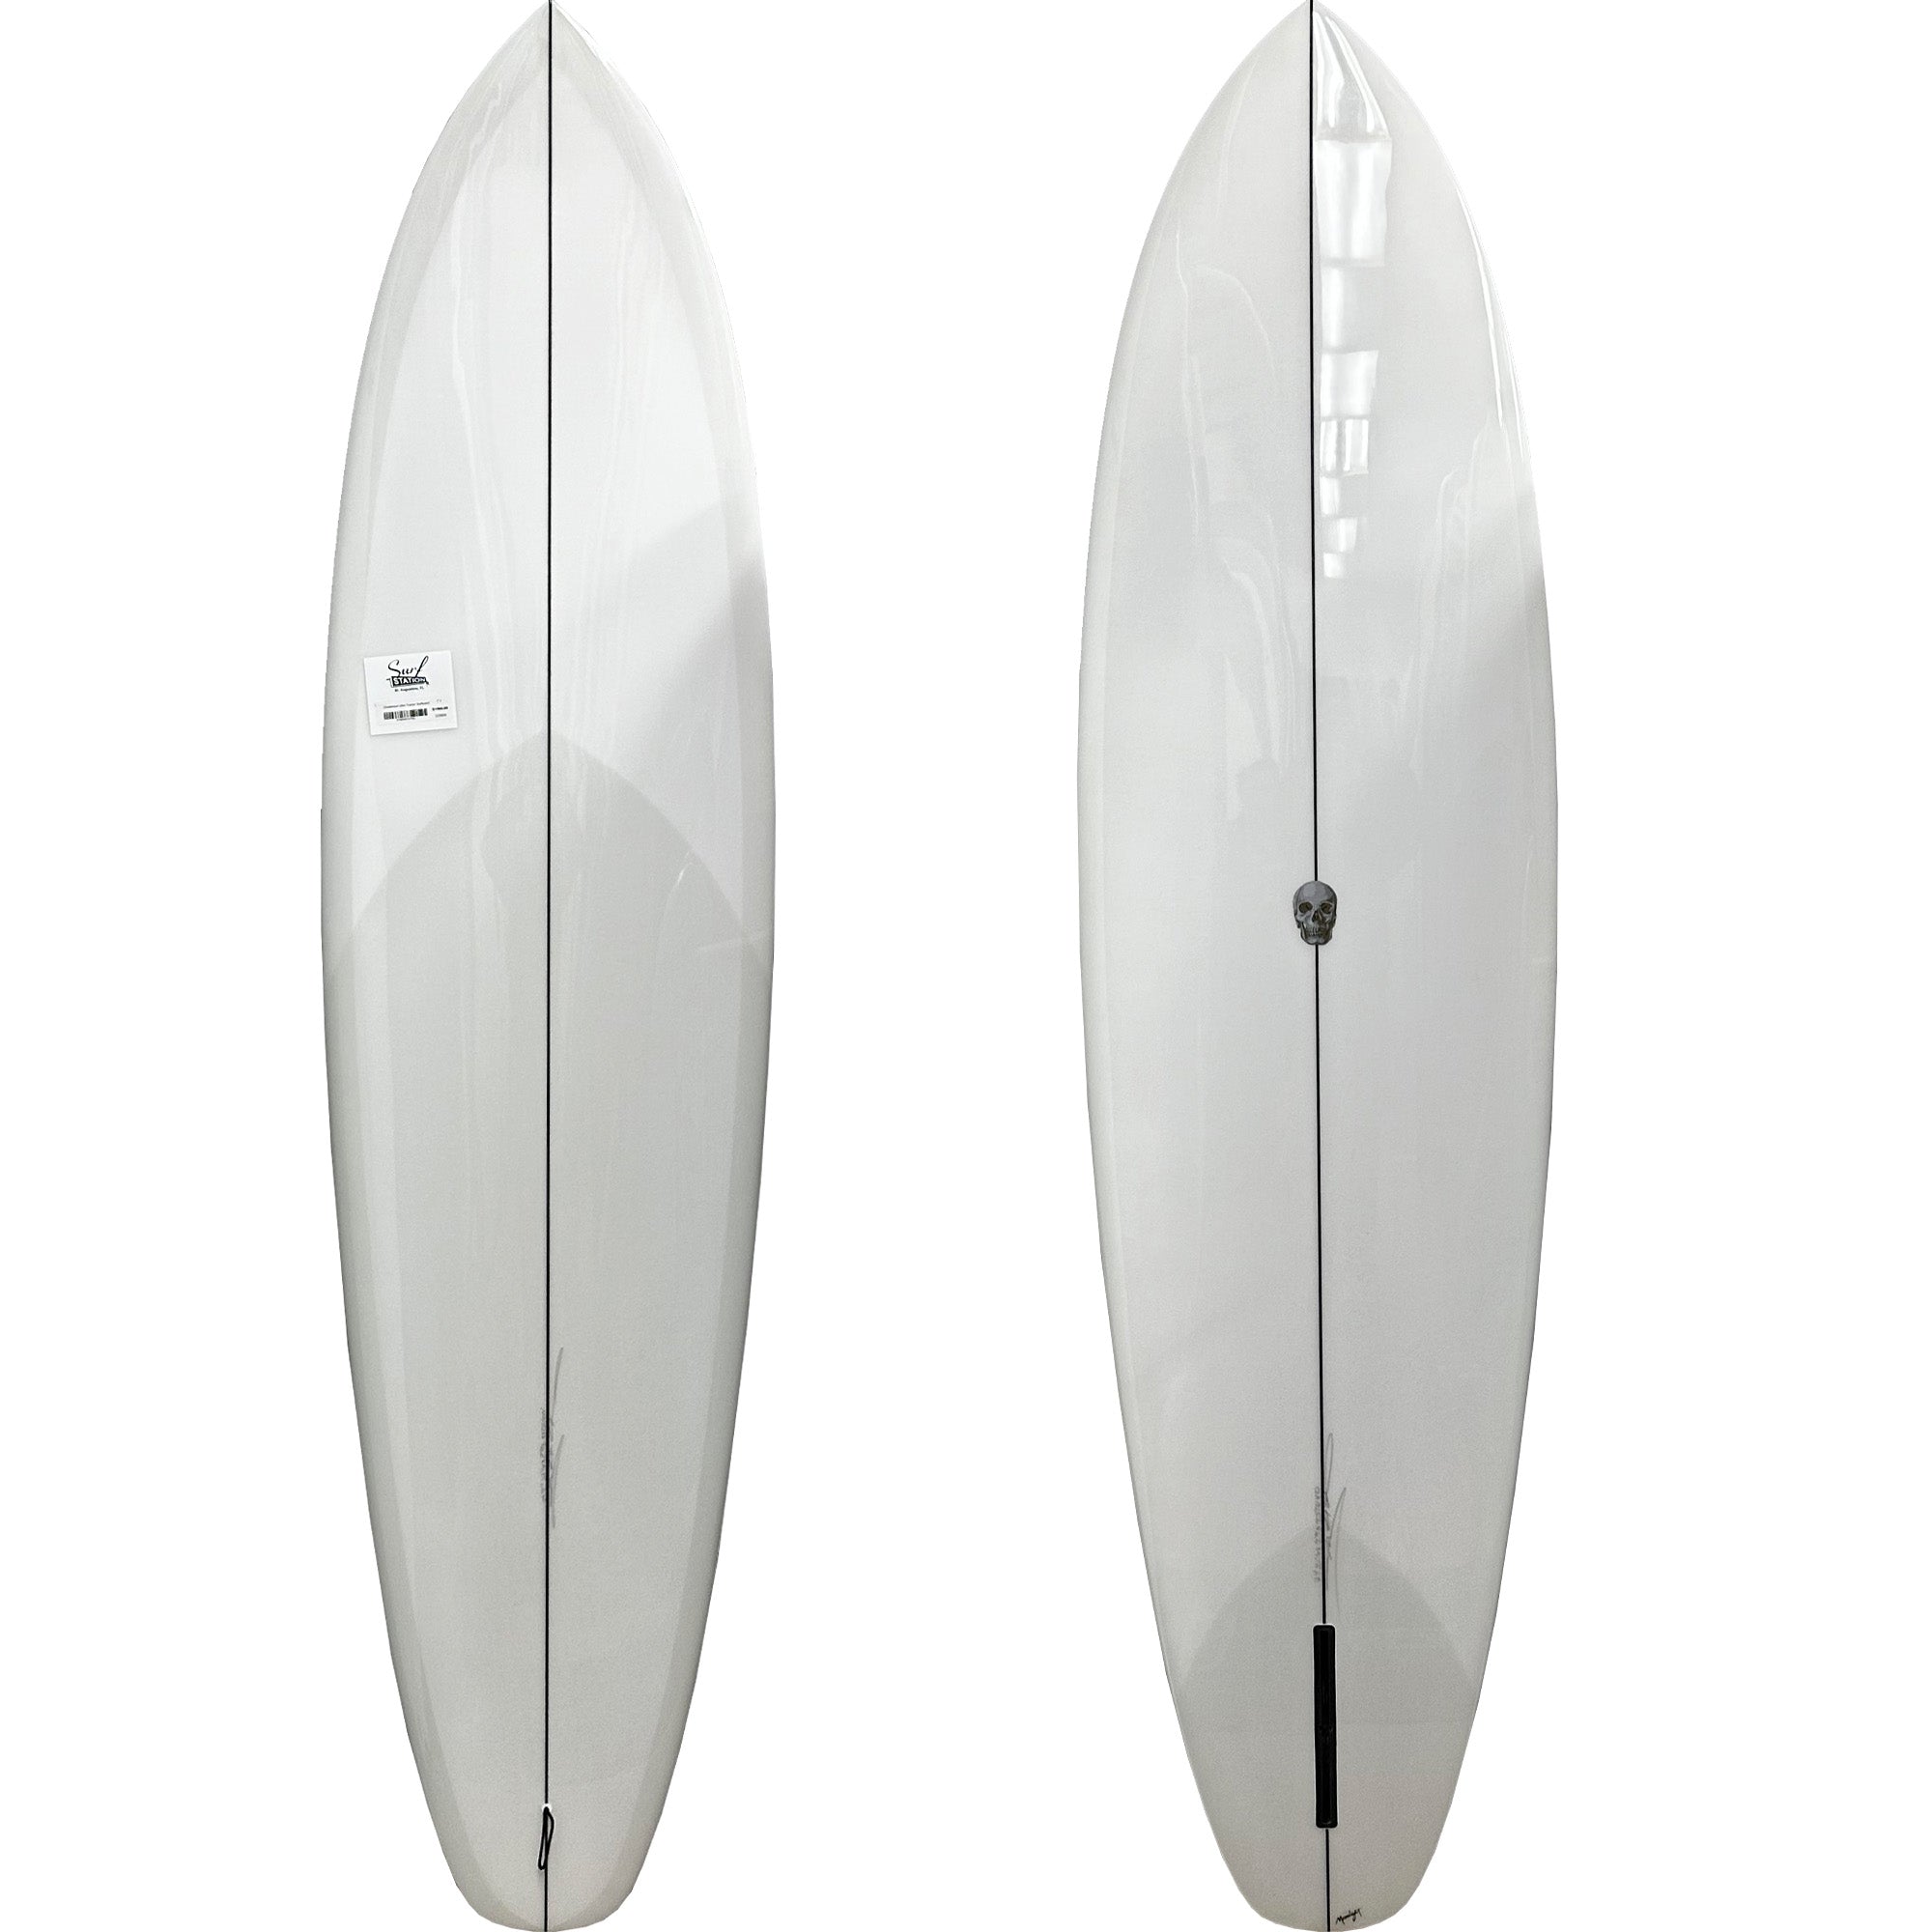 Christenson Ultra Tracker 7'4 Surfboard